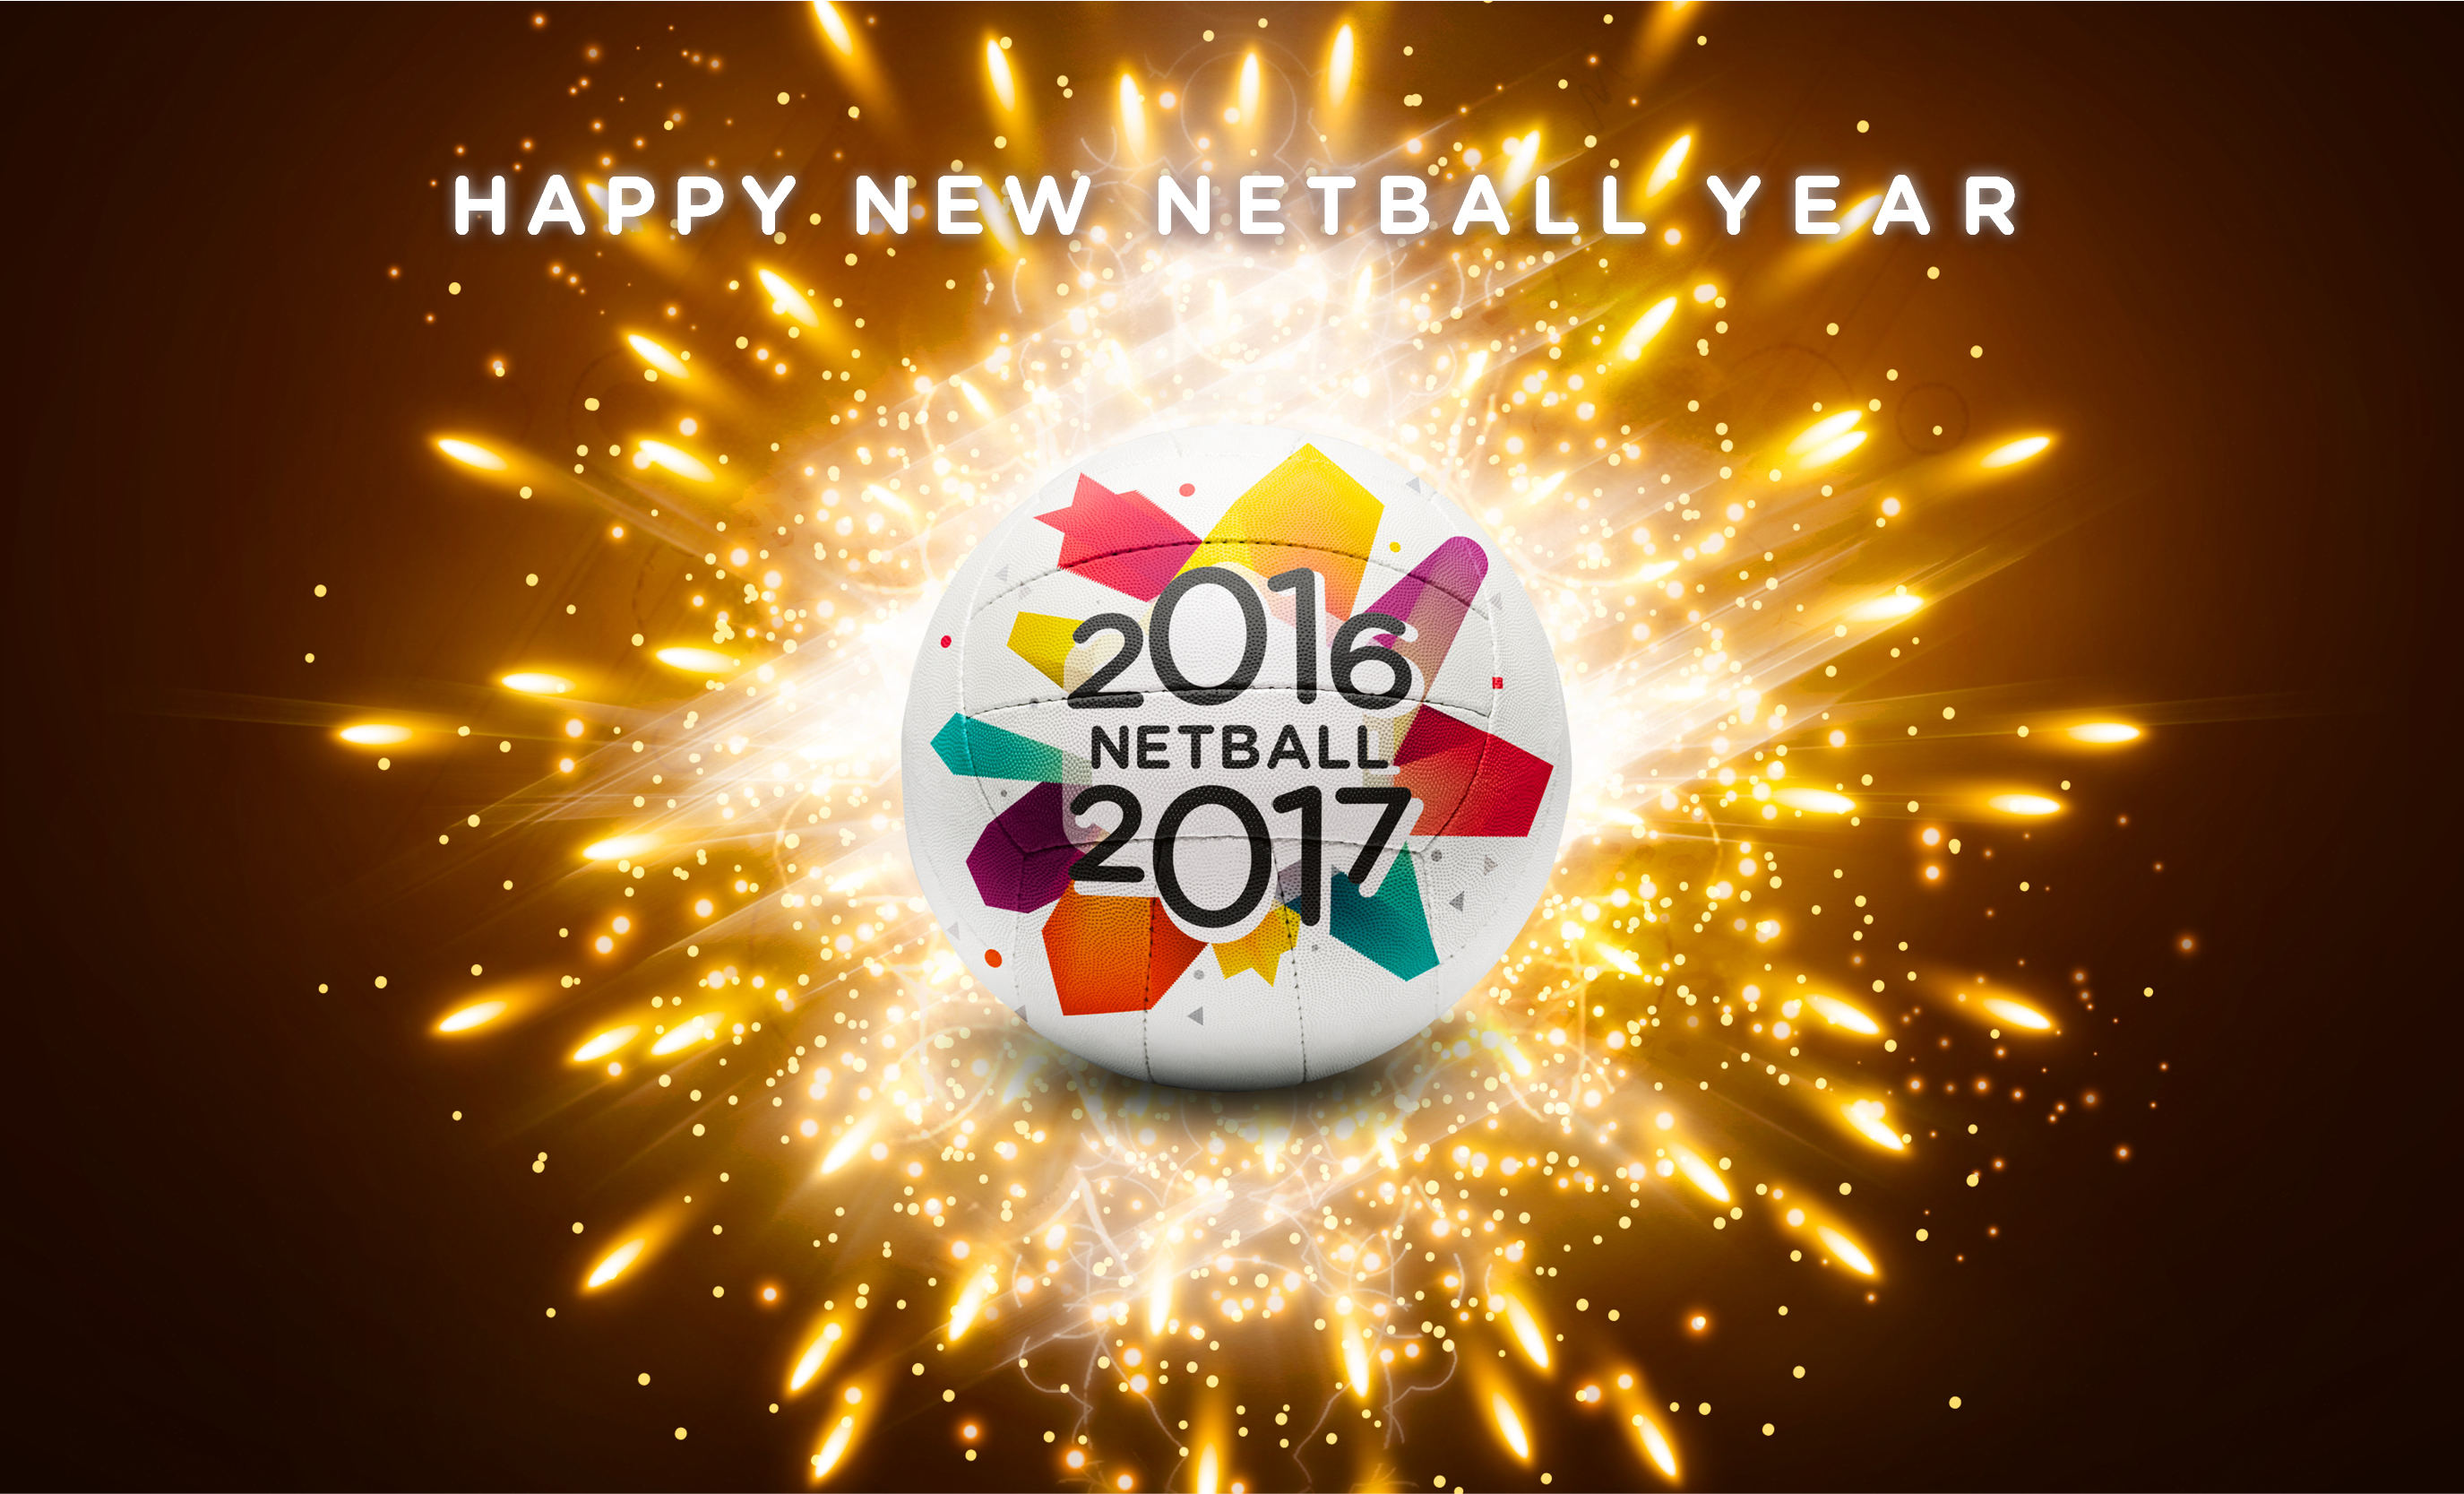 Happy Netball New Year!